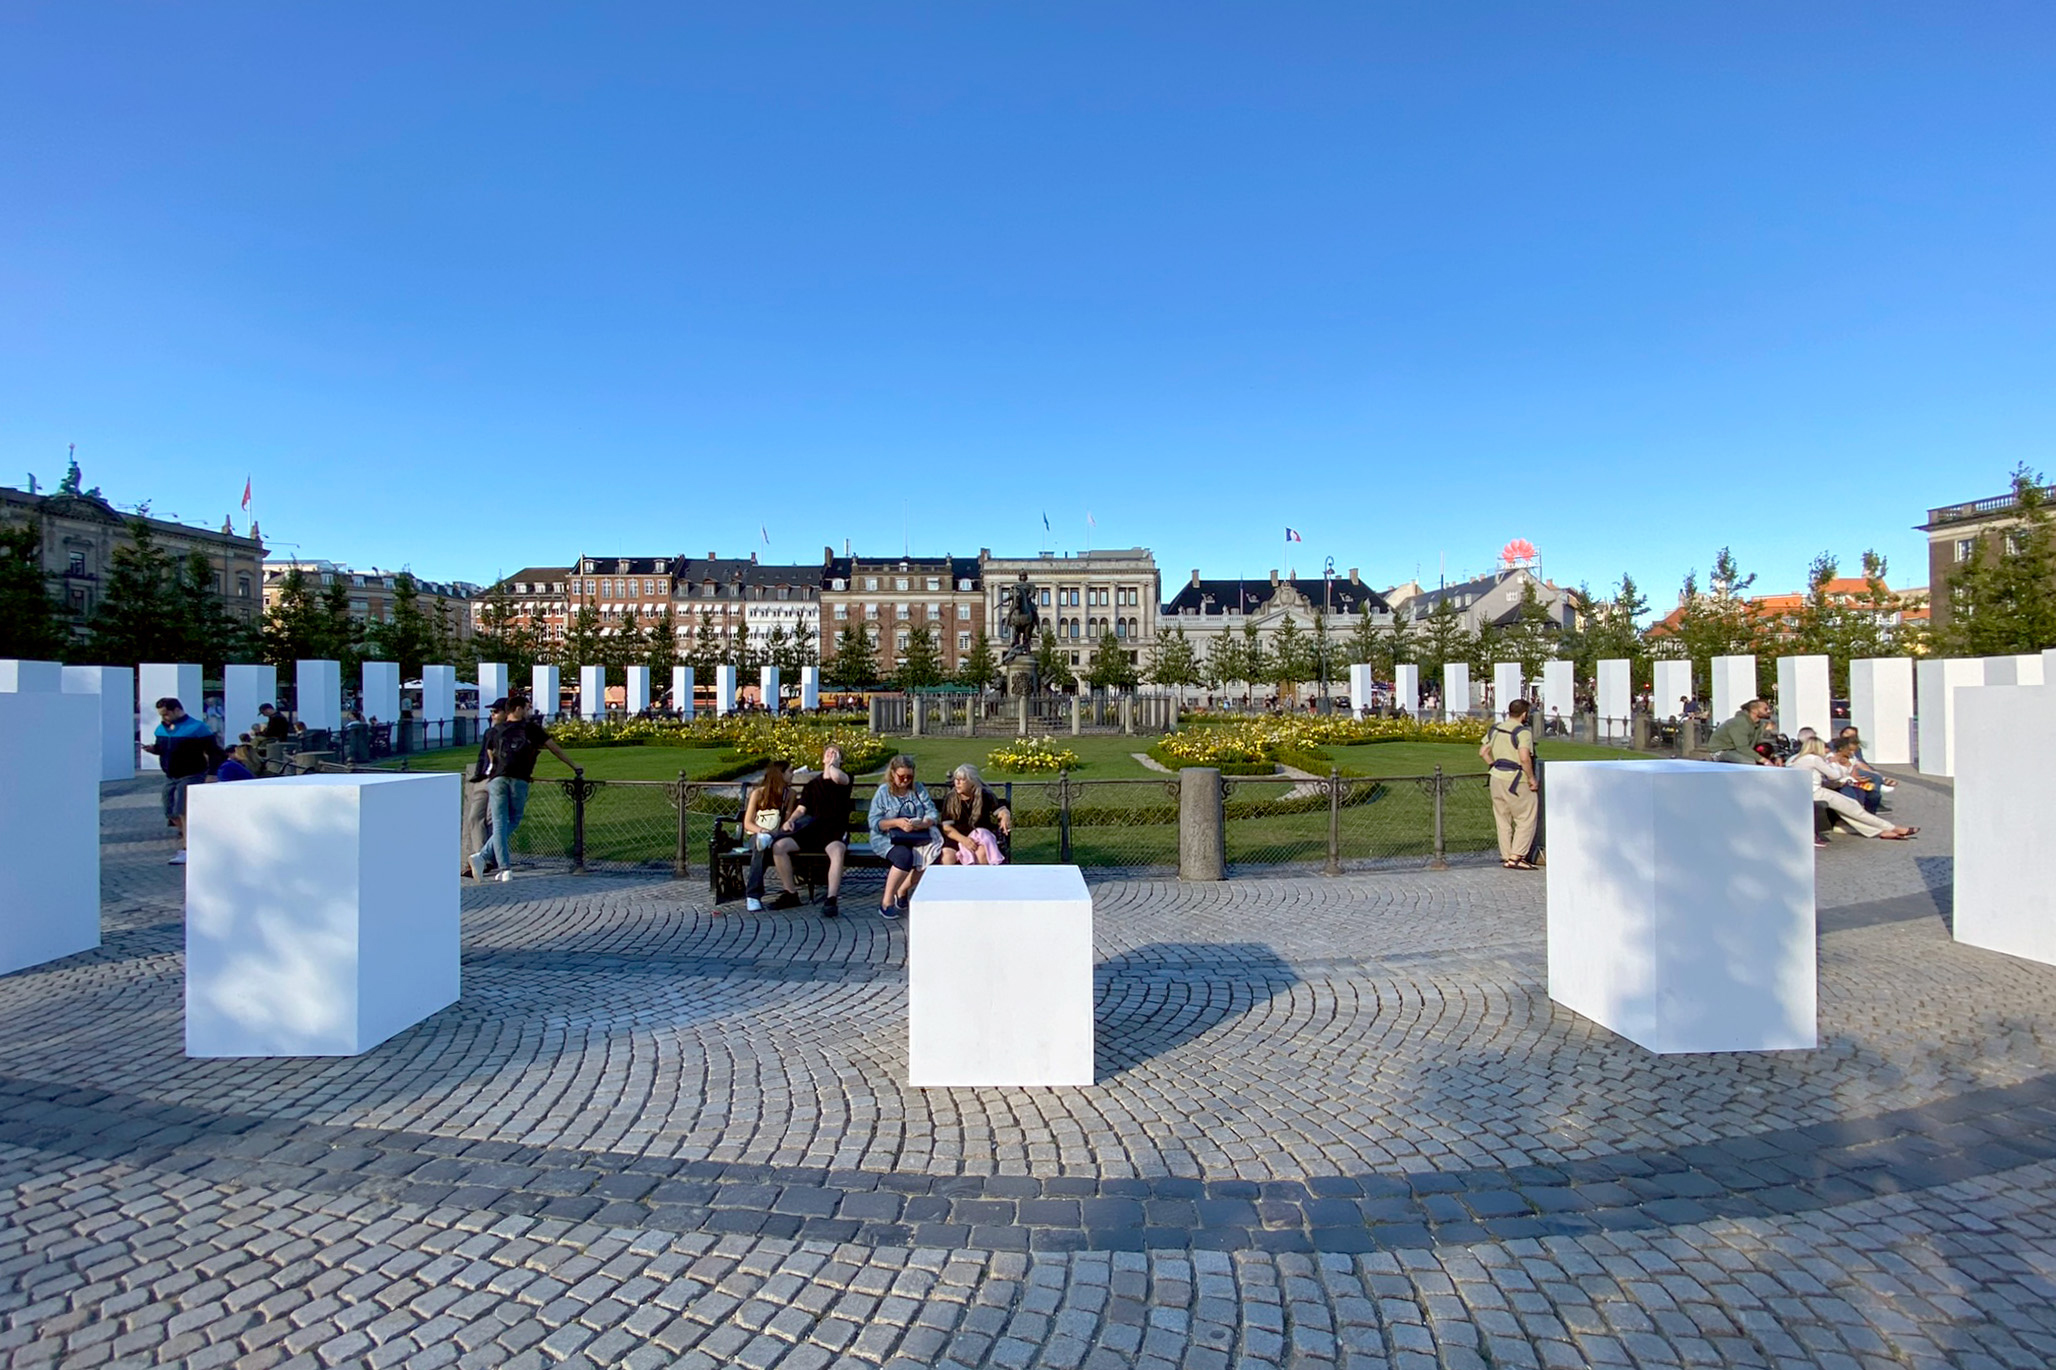 50 Queens Installation in Denmark